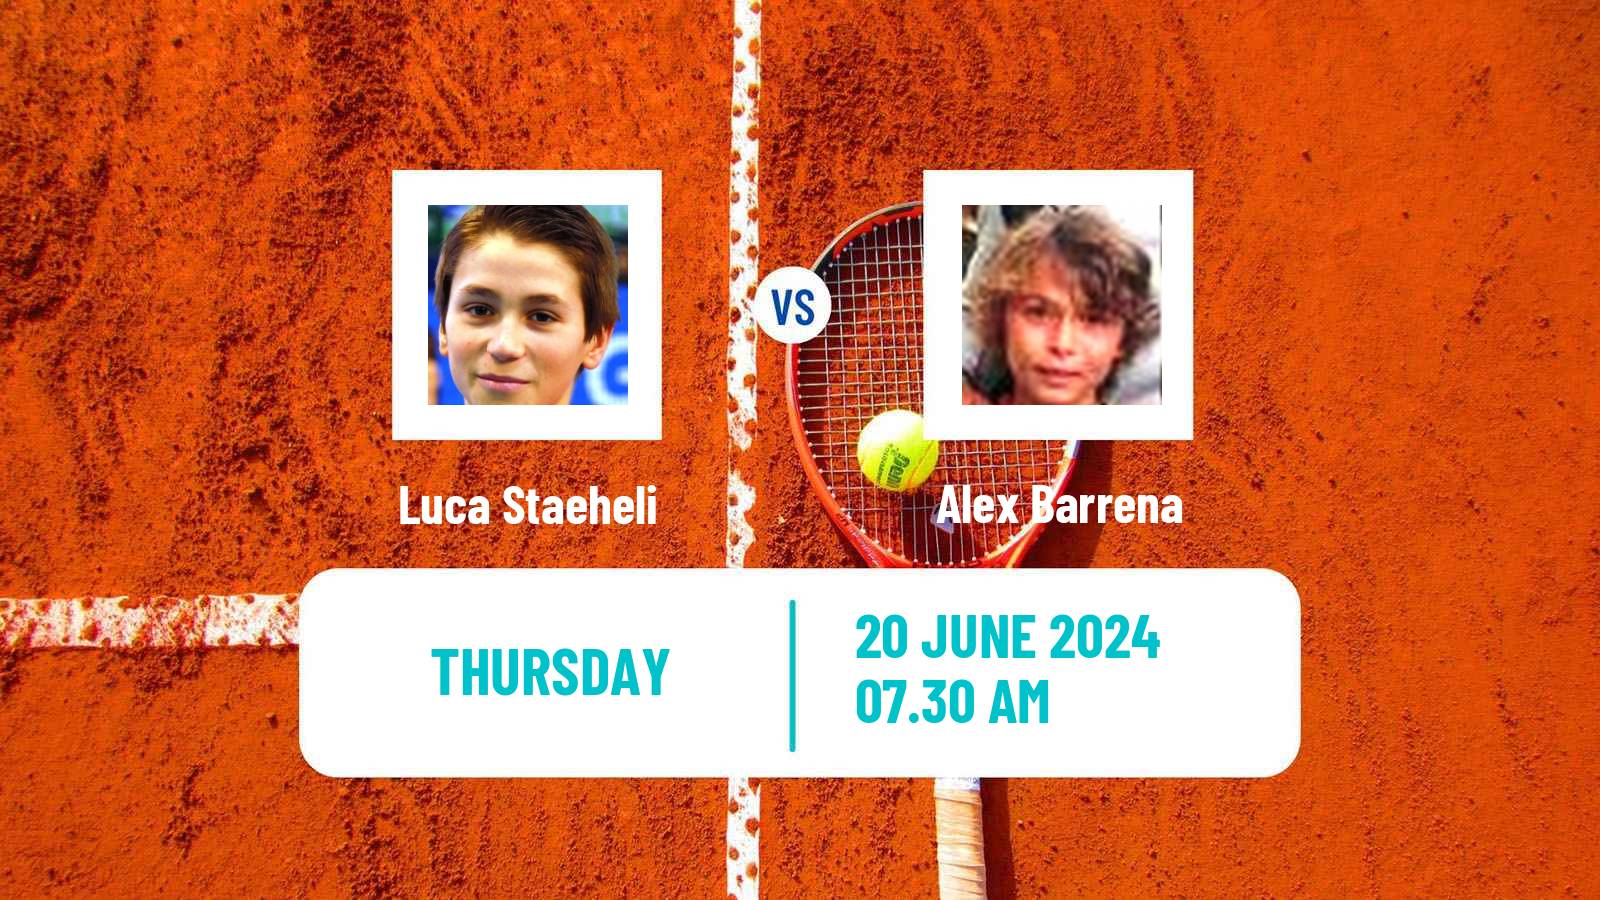 Tennis ITF M15 Koszalin 2 Men Luca Staeheli - Alex Barrena